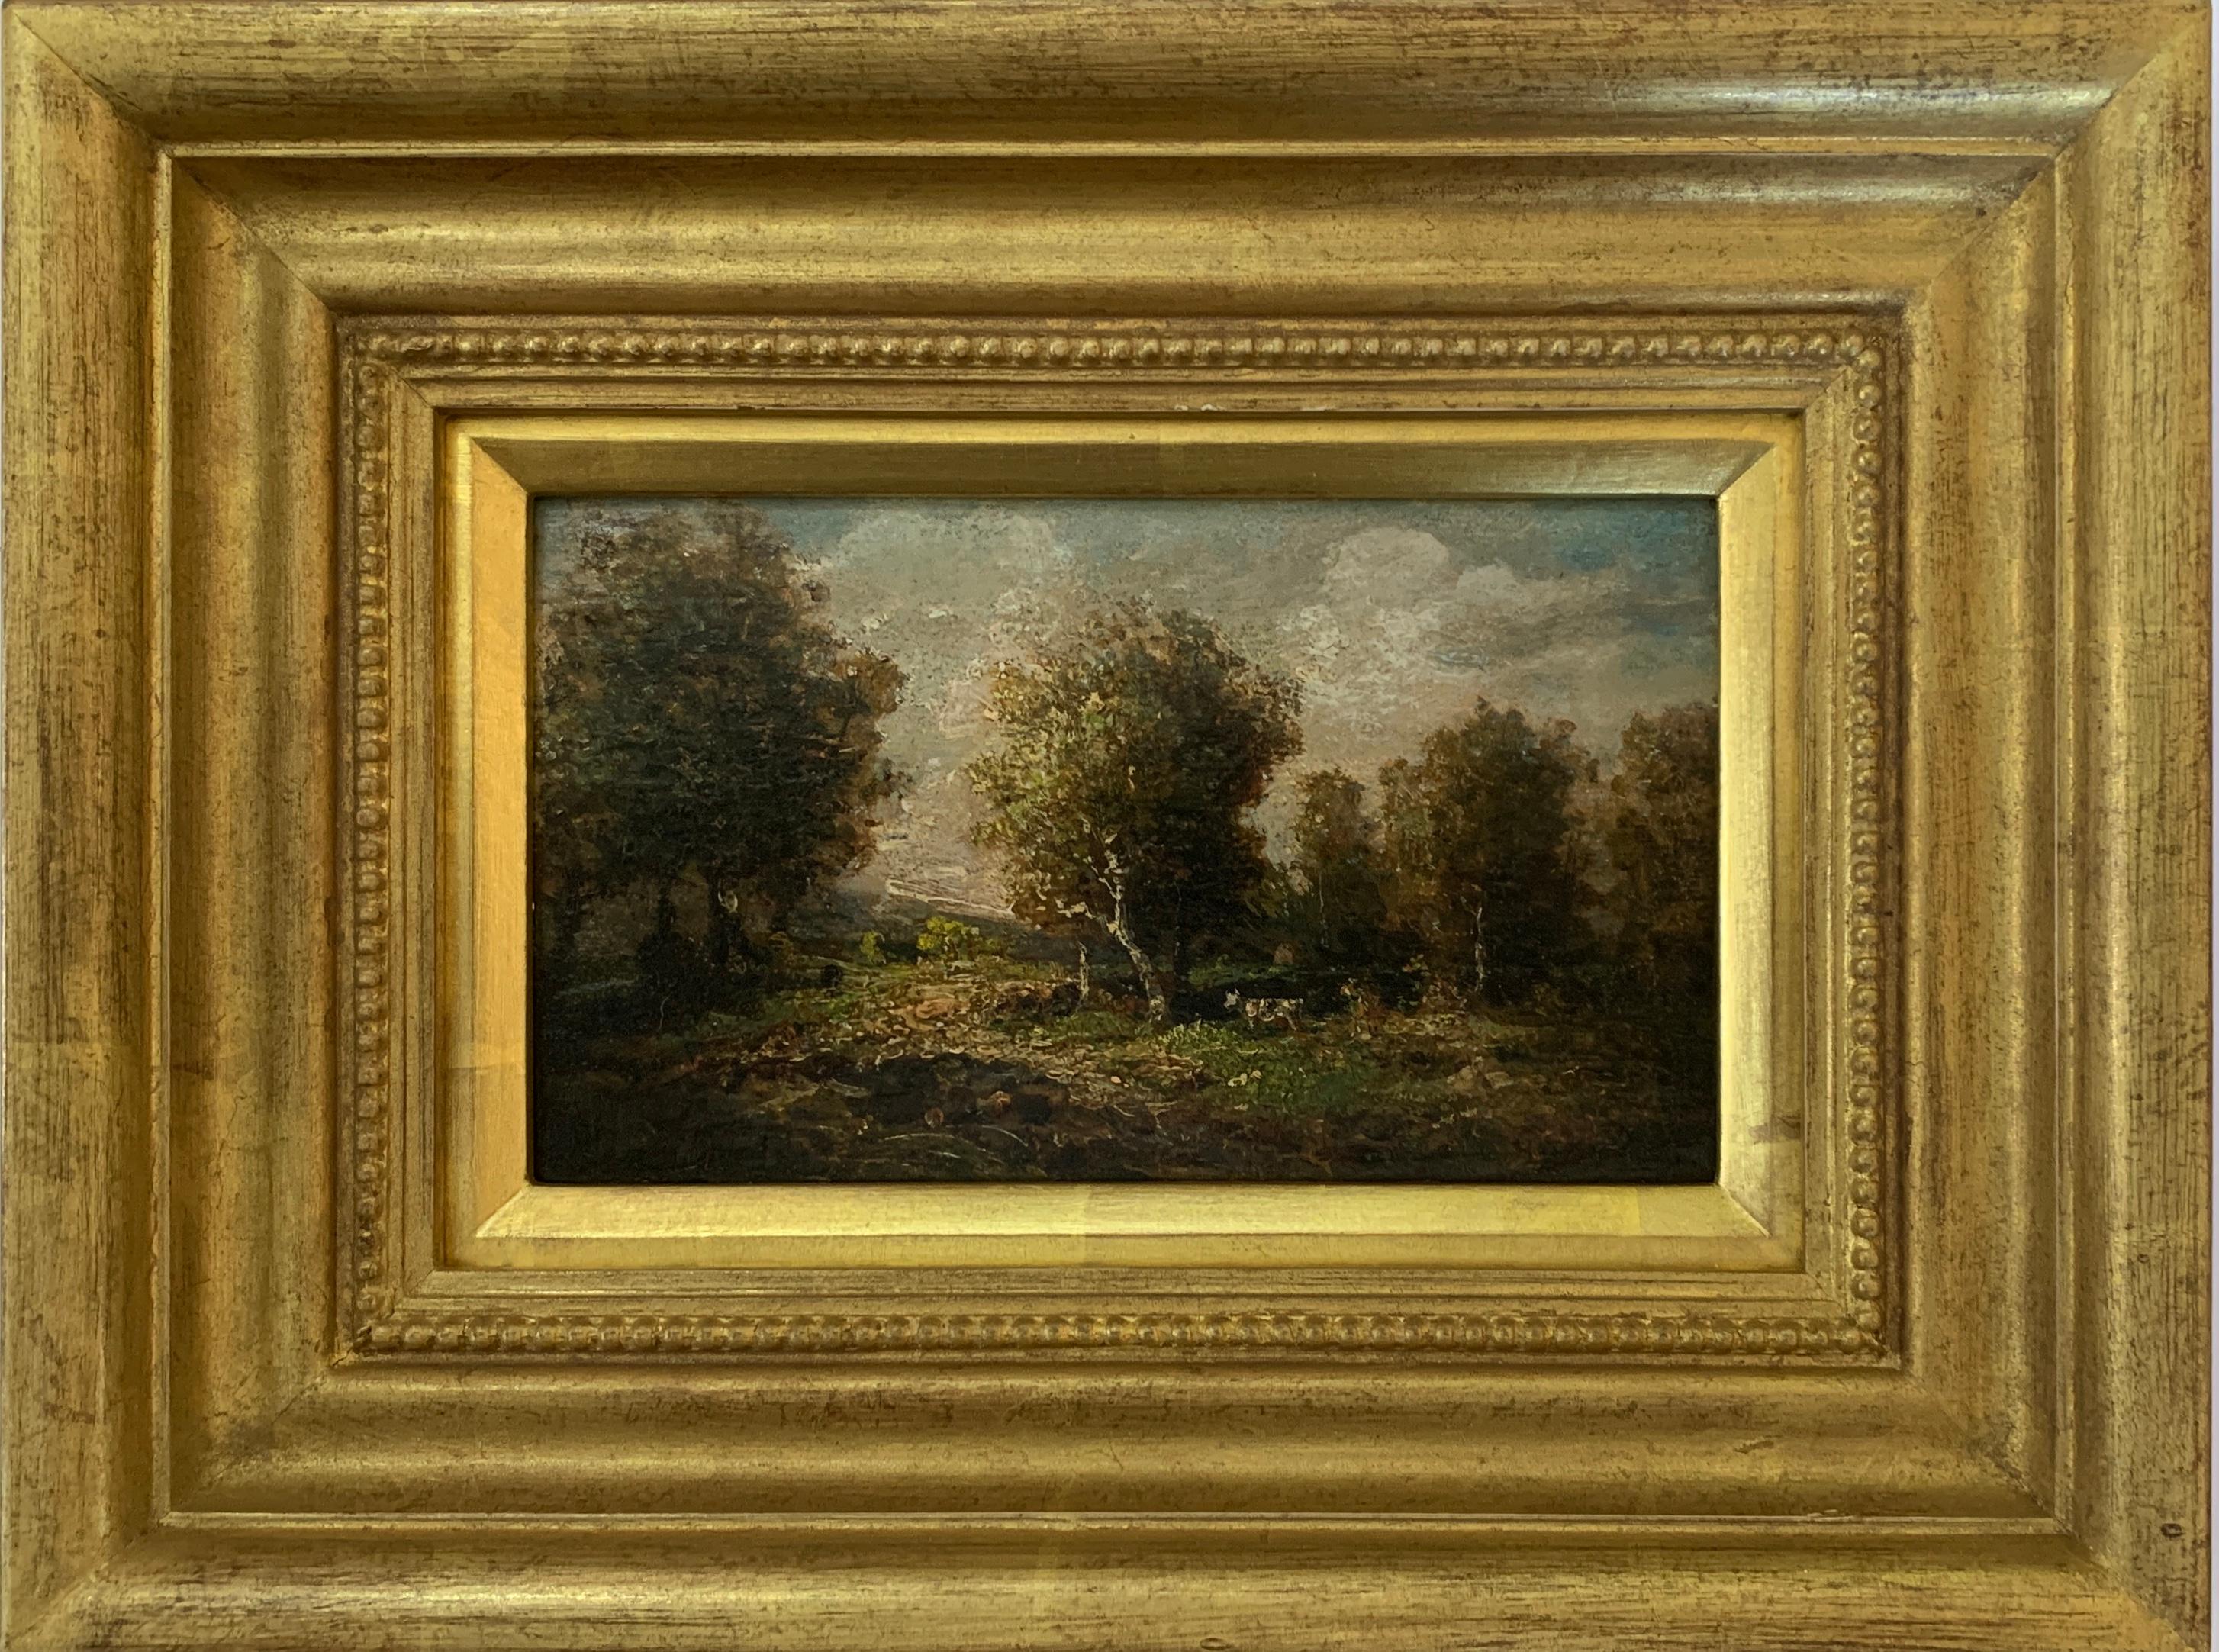 Attributed to Narcisse Virgilio Diaz de la Pena Figurative Painting - 19th century French forest landscape near Barbizon and Fontainebleau